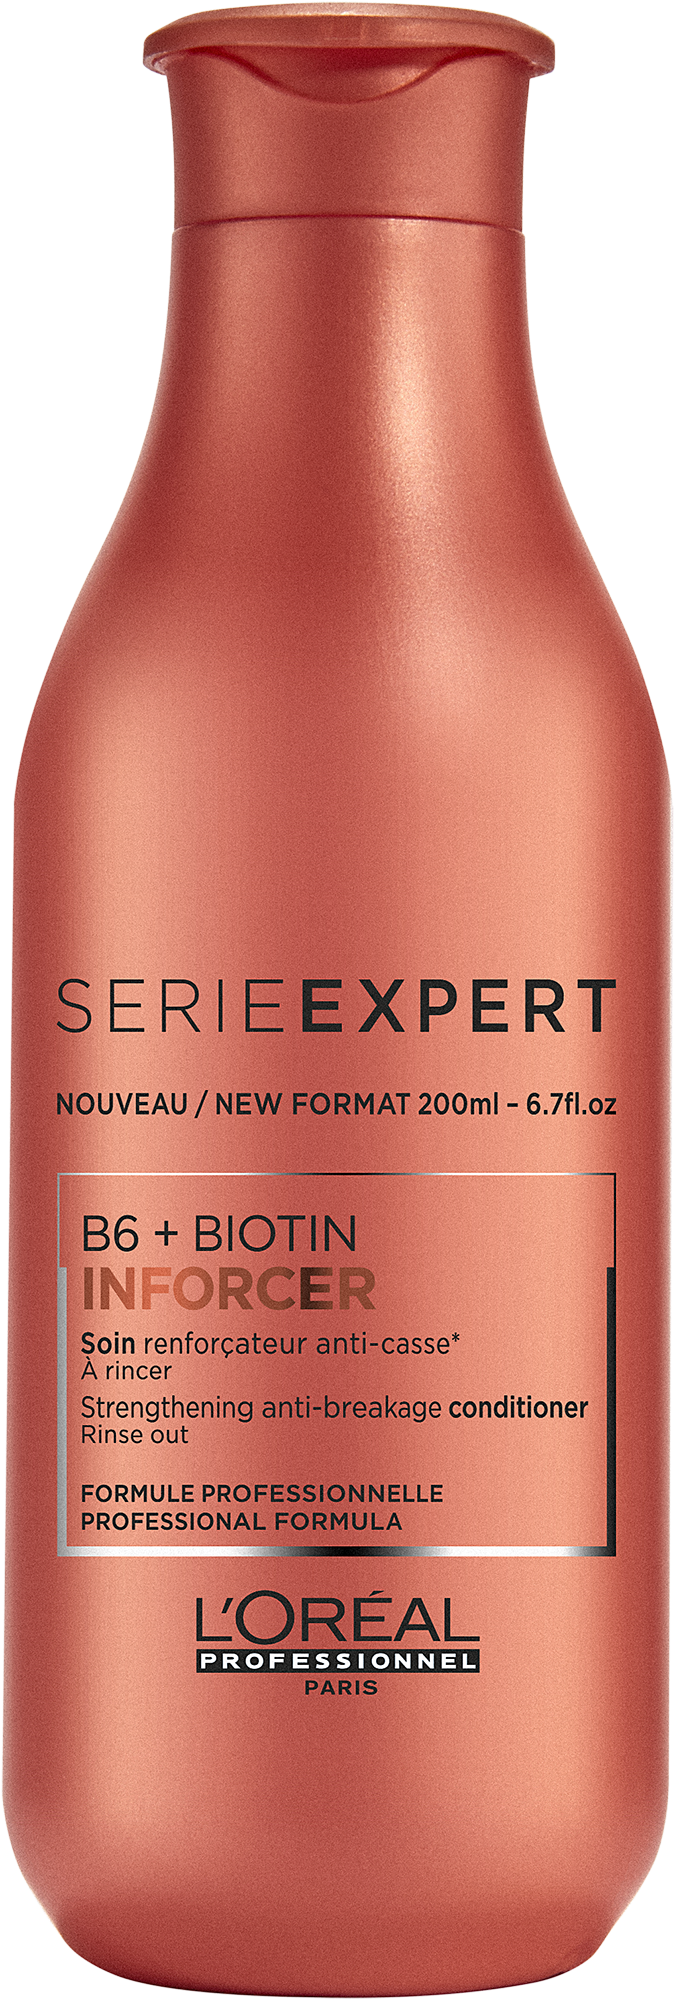 SERIE EXPERT B6 + Biotin Inforcer Shampoo 300mL